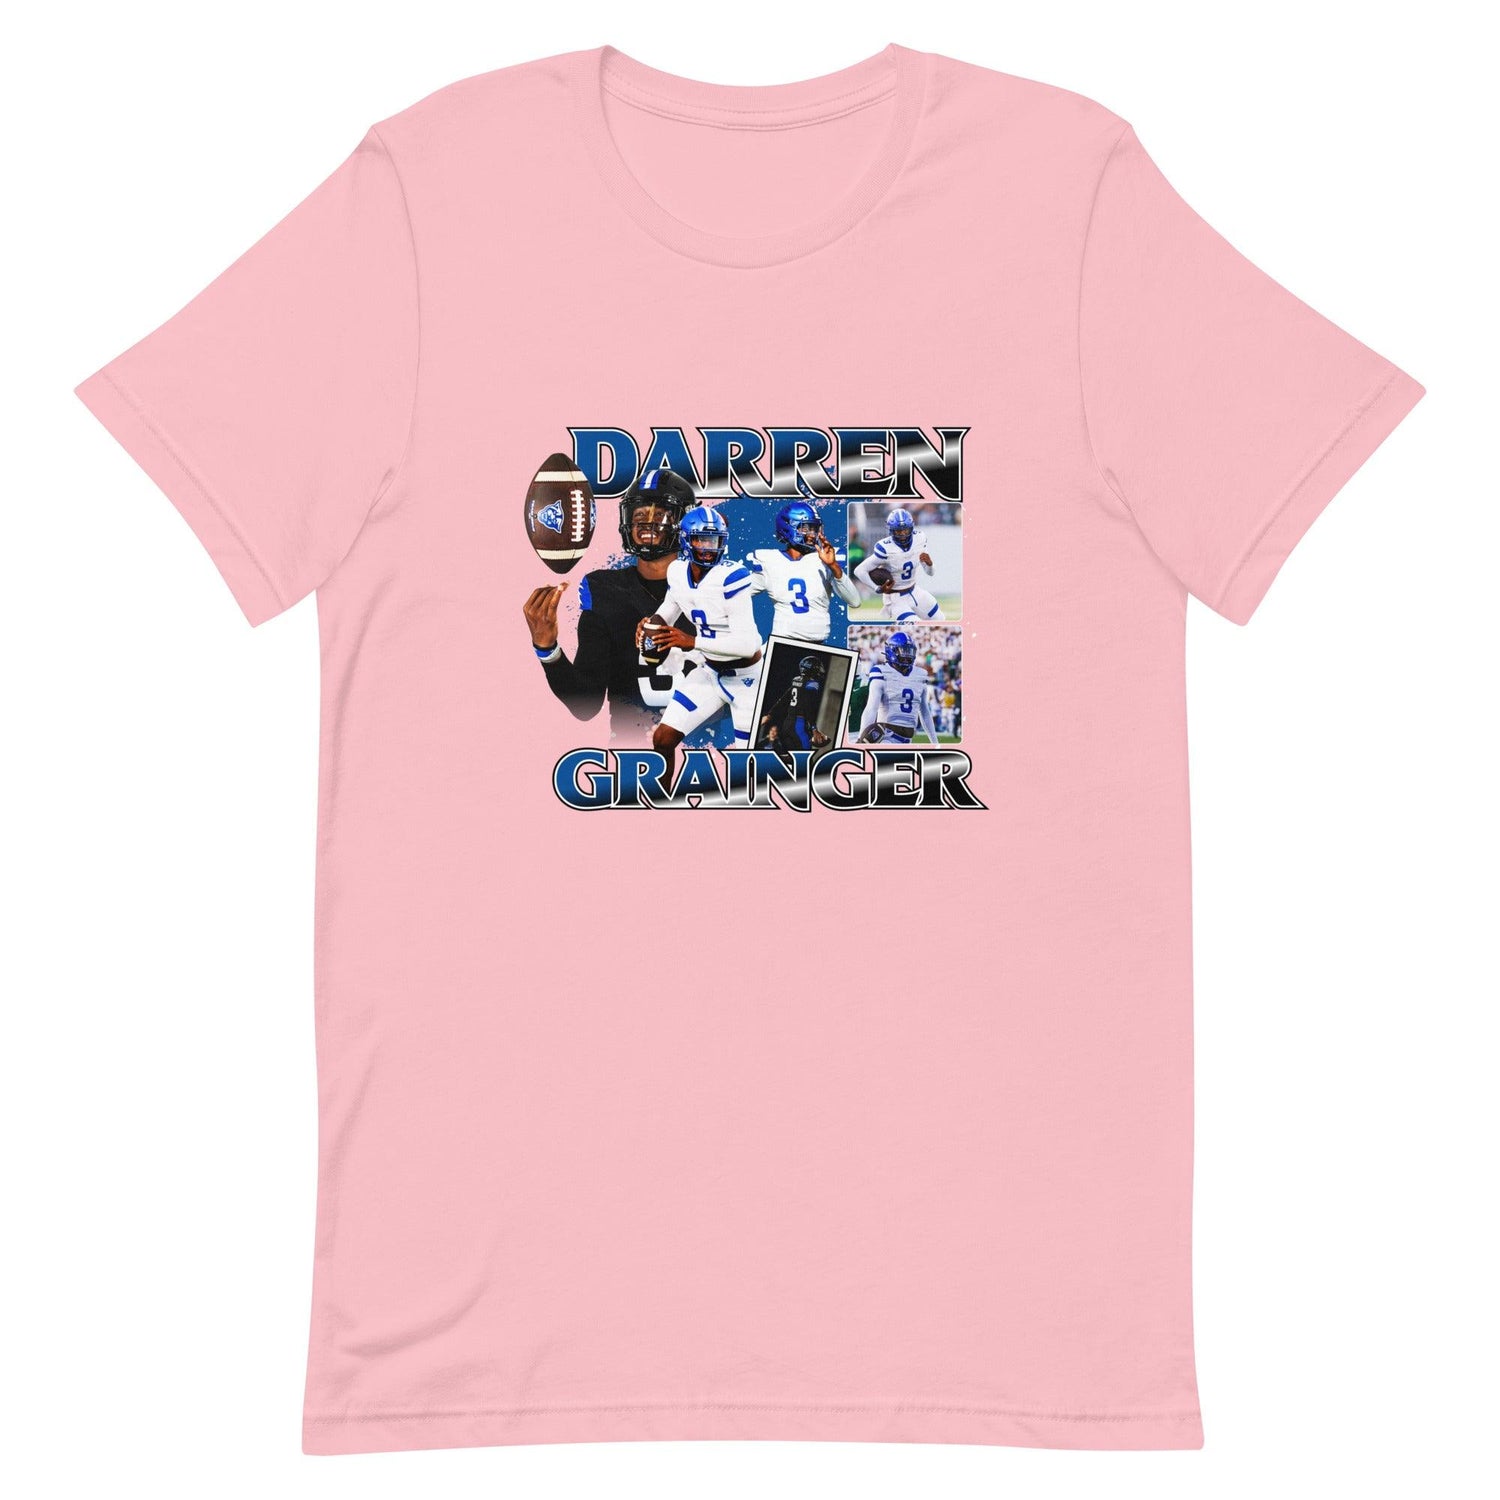 Darren Grainger "Vintage" t-shirt - Fan Arch